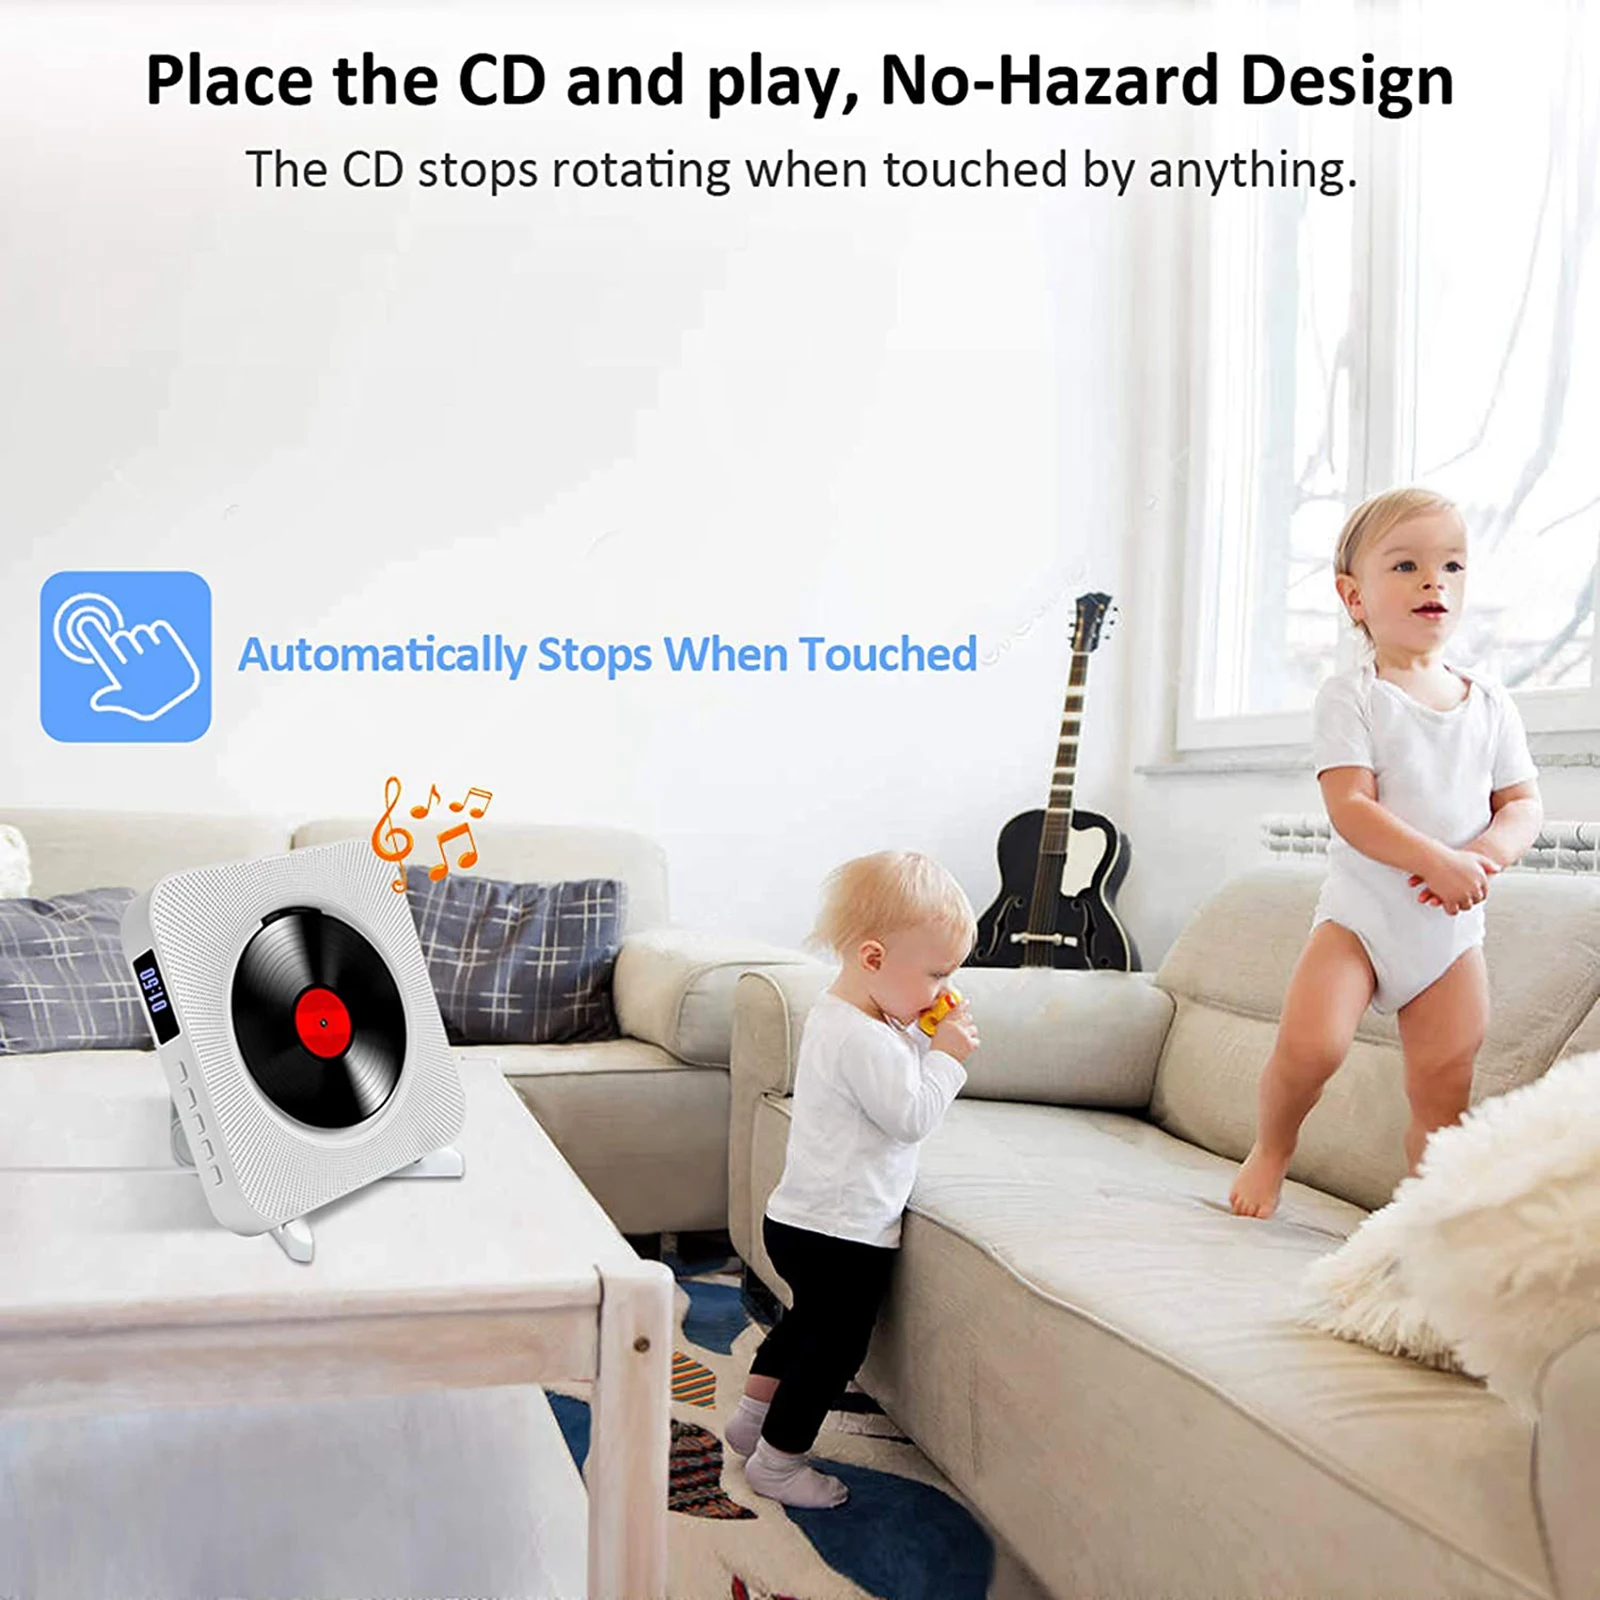 White Bluetooth CD Player Wall Mountable Remote Control w/Headphone Jack AU